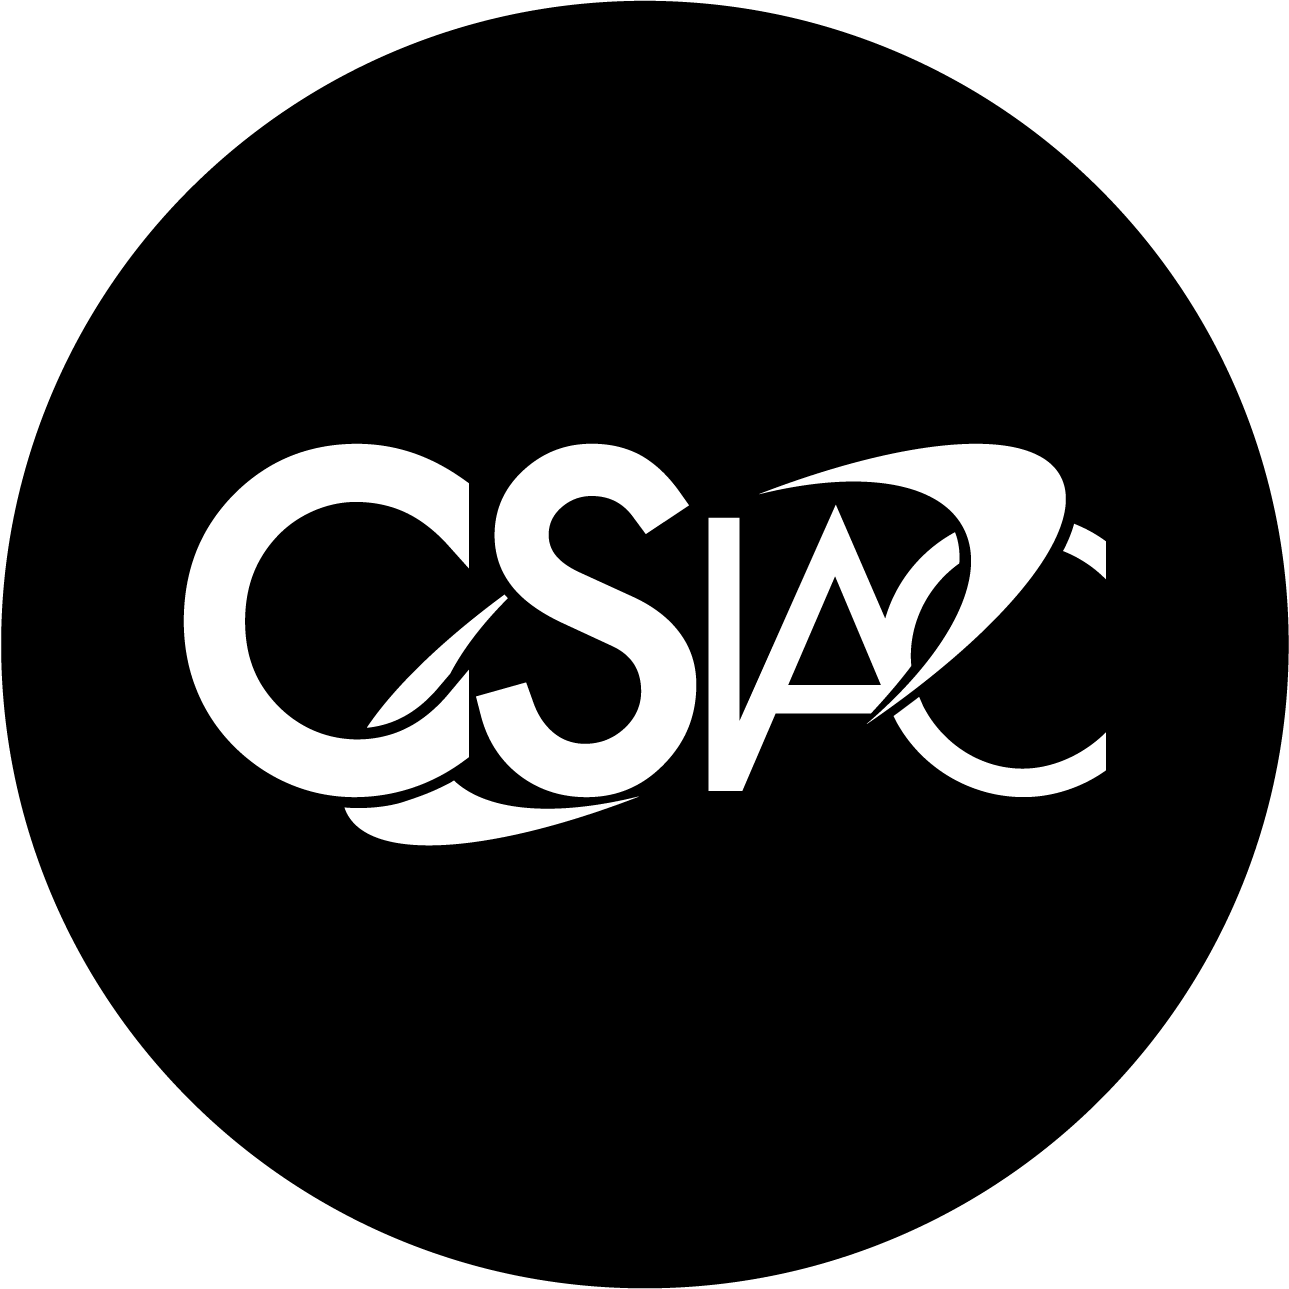 CSIAC White_Black Circle logo